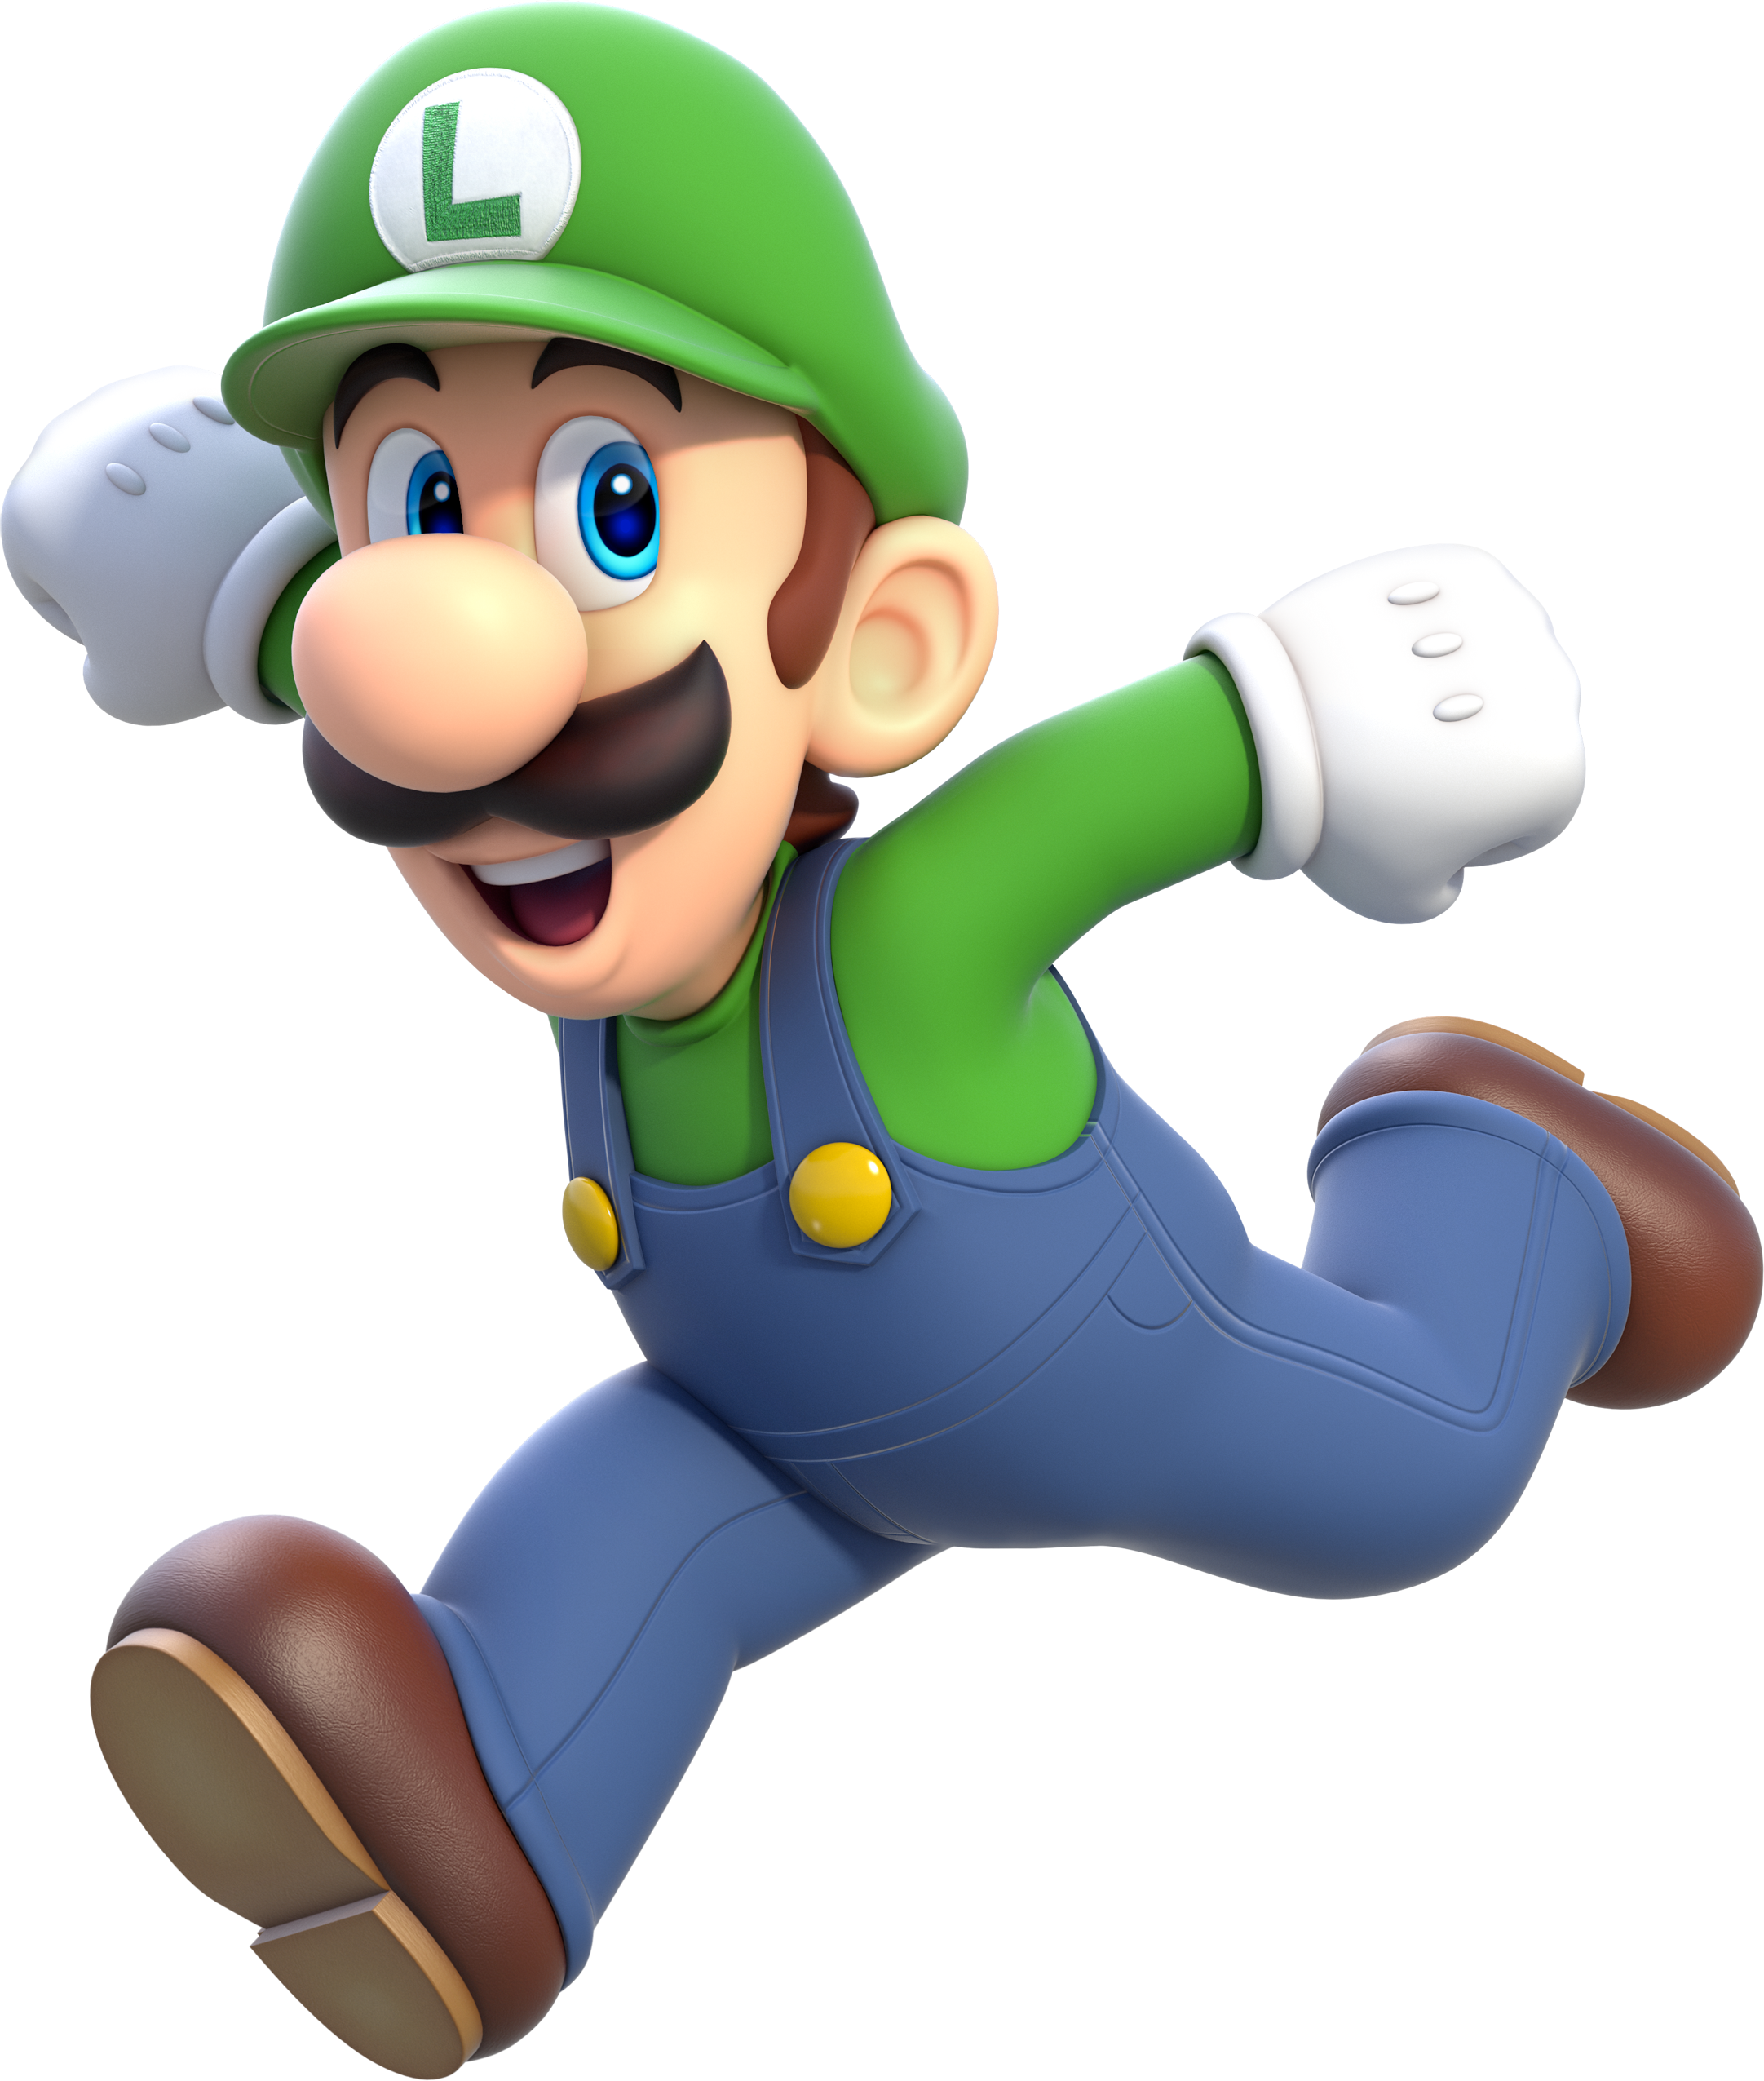 Super Mario 3d World Wii U Artwork Including Characters Enemies